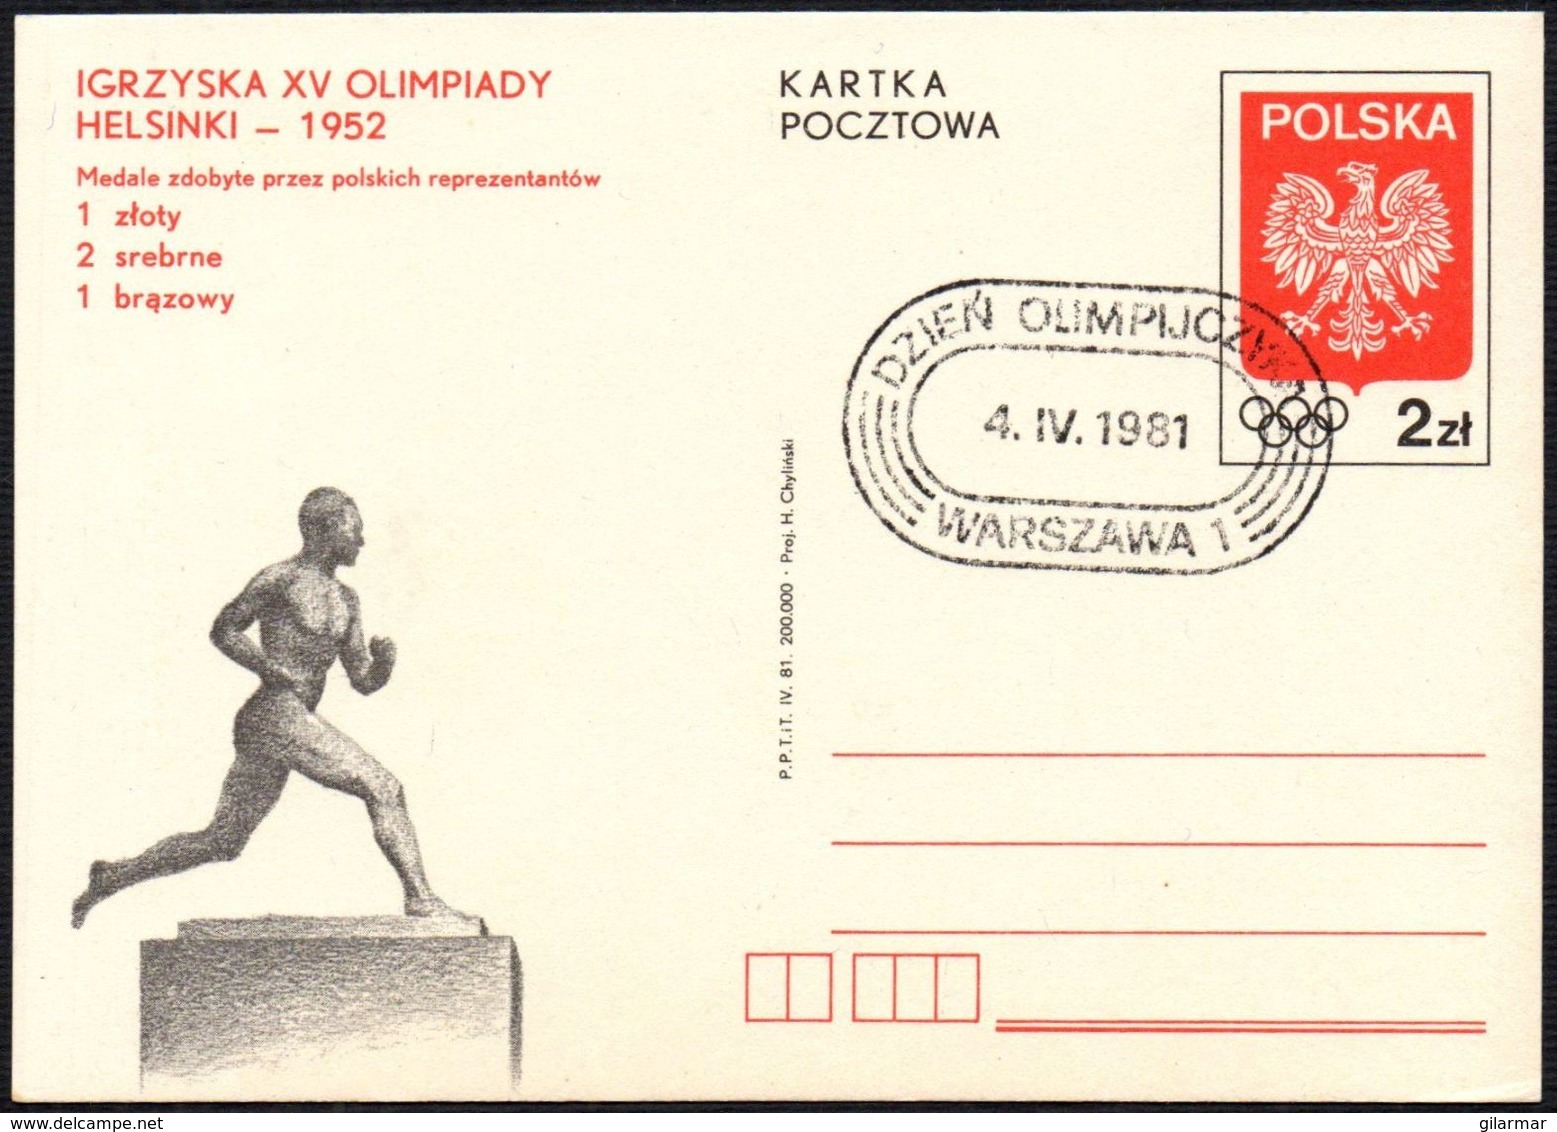 POLAND WARSAW 1981 - OLYMPIC DAY - POSTAL STATIONERY OVERPRINTED POLISH MEDAL AT OLYMPIC GAMES HELSINKI 1952 - Sommer 1952: Helsinki